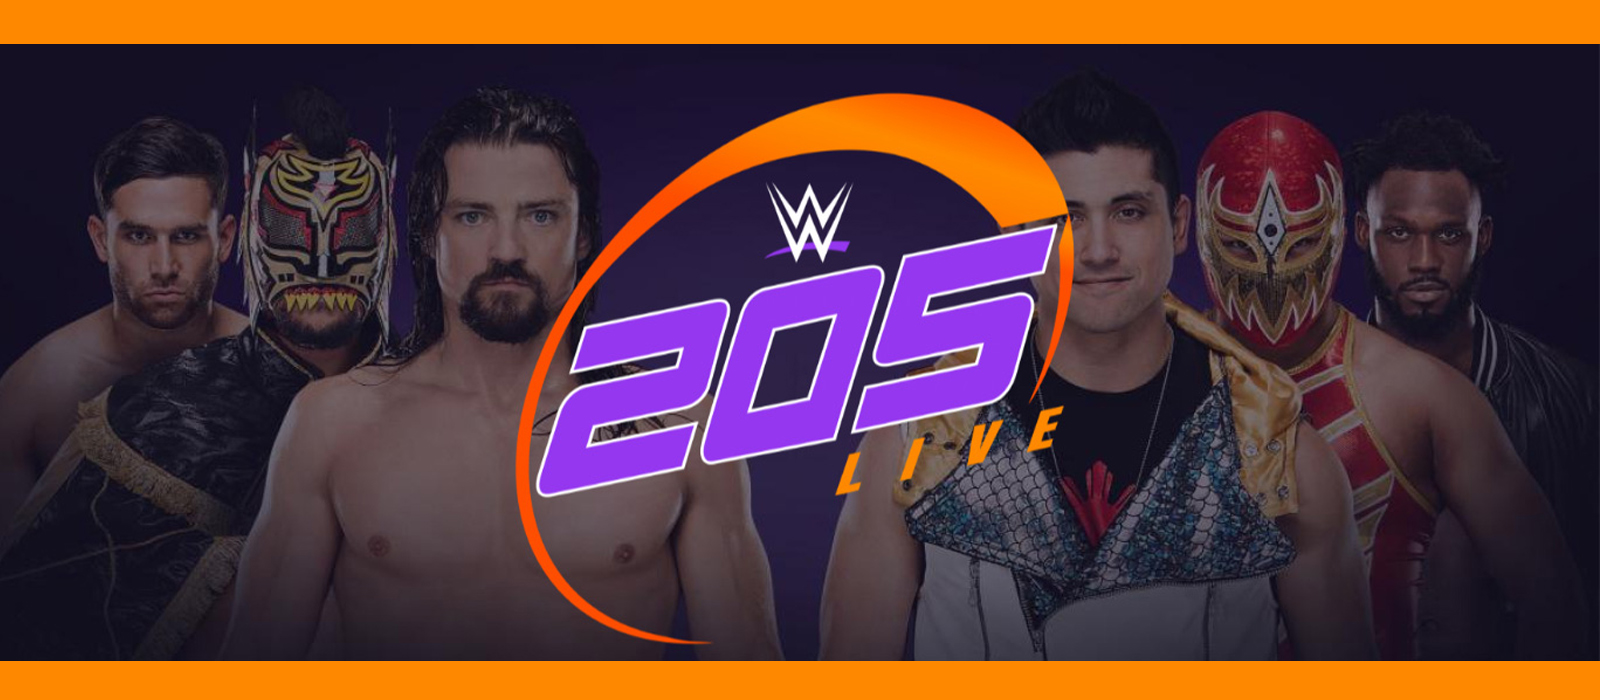 WWE: 205 Live